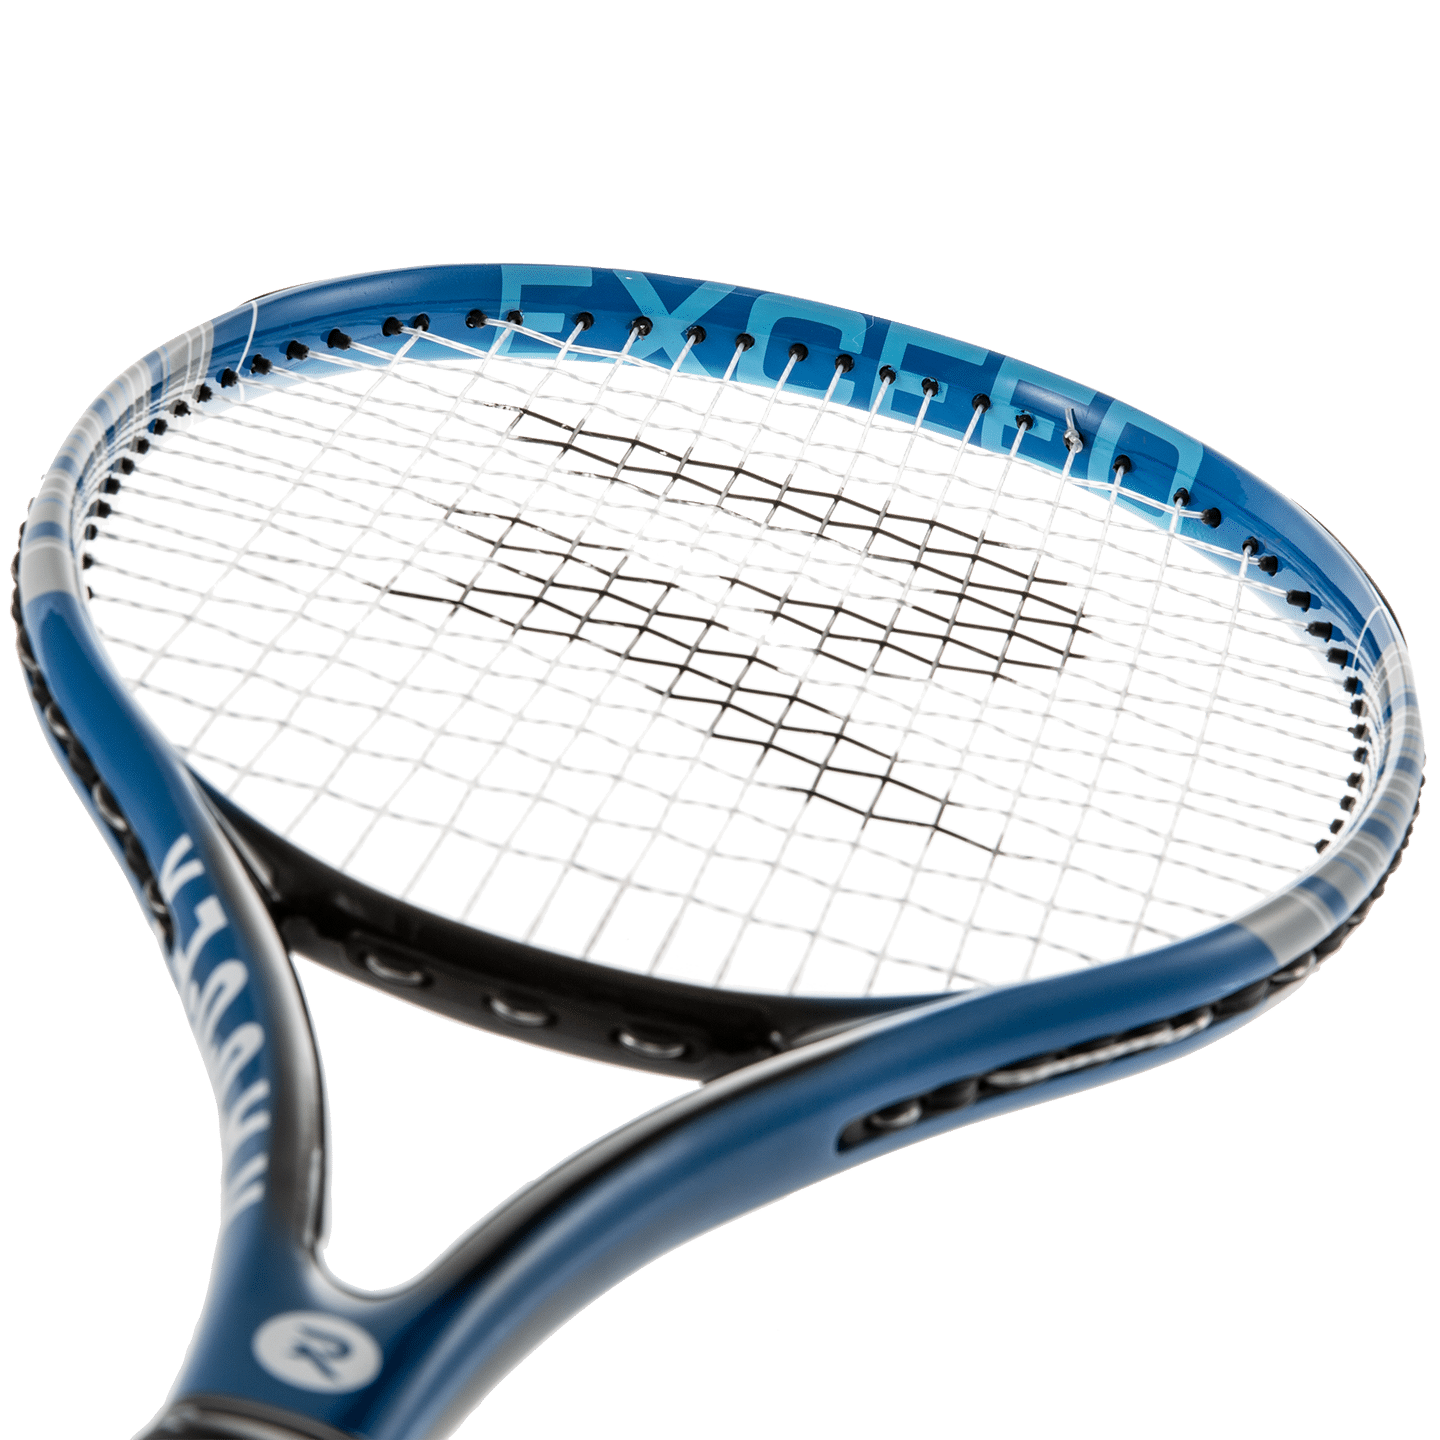 Raquex Tennis Racket Exceed - Lightweight Carbon Fibre Full Cover Intermediate